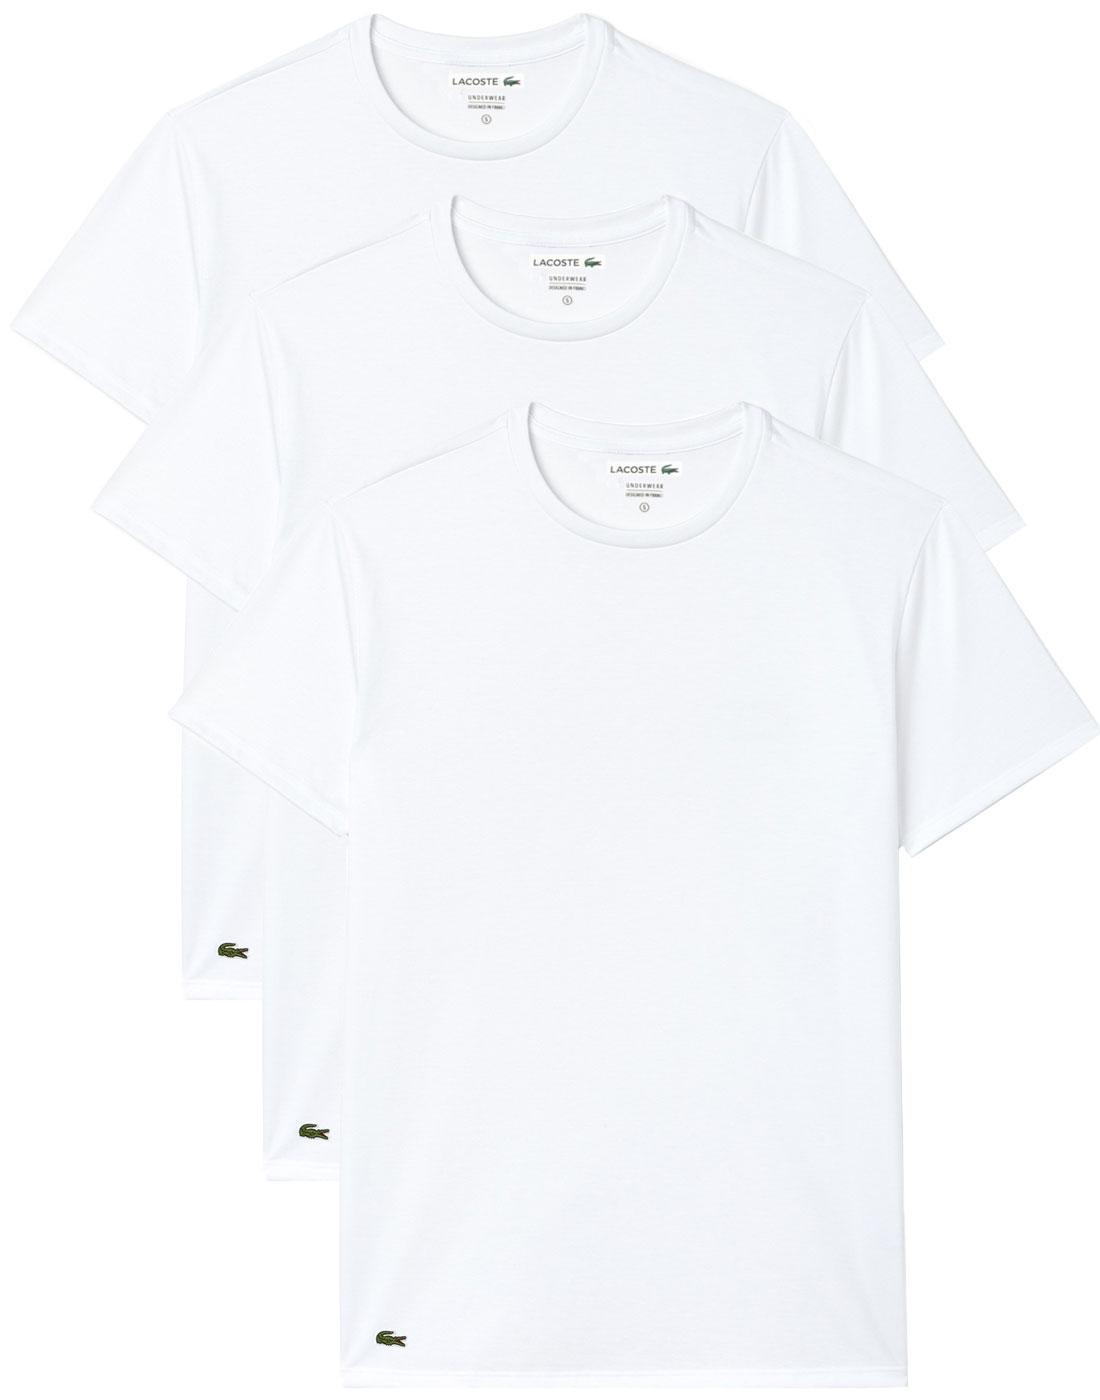 LACOSTE Men's 3 Pack Crew Neck T-Shirt - WHITE